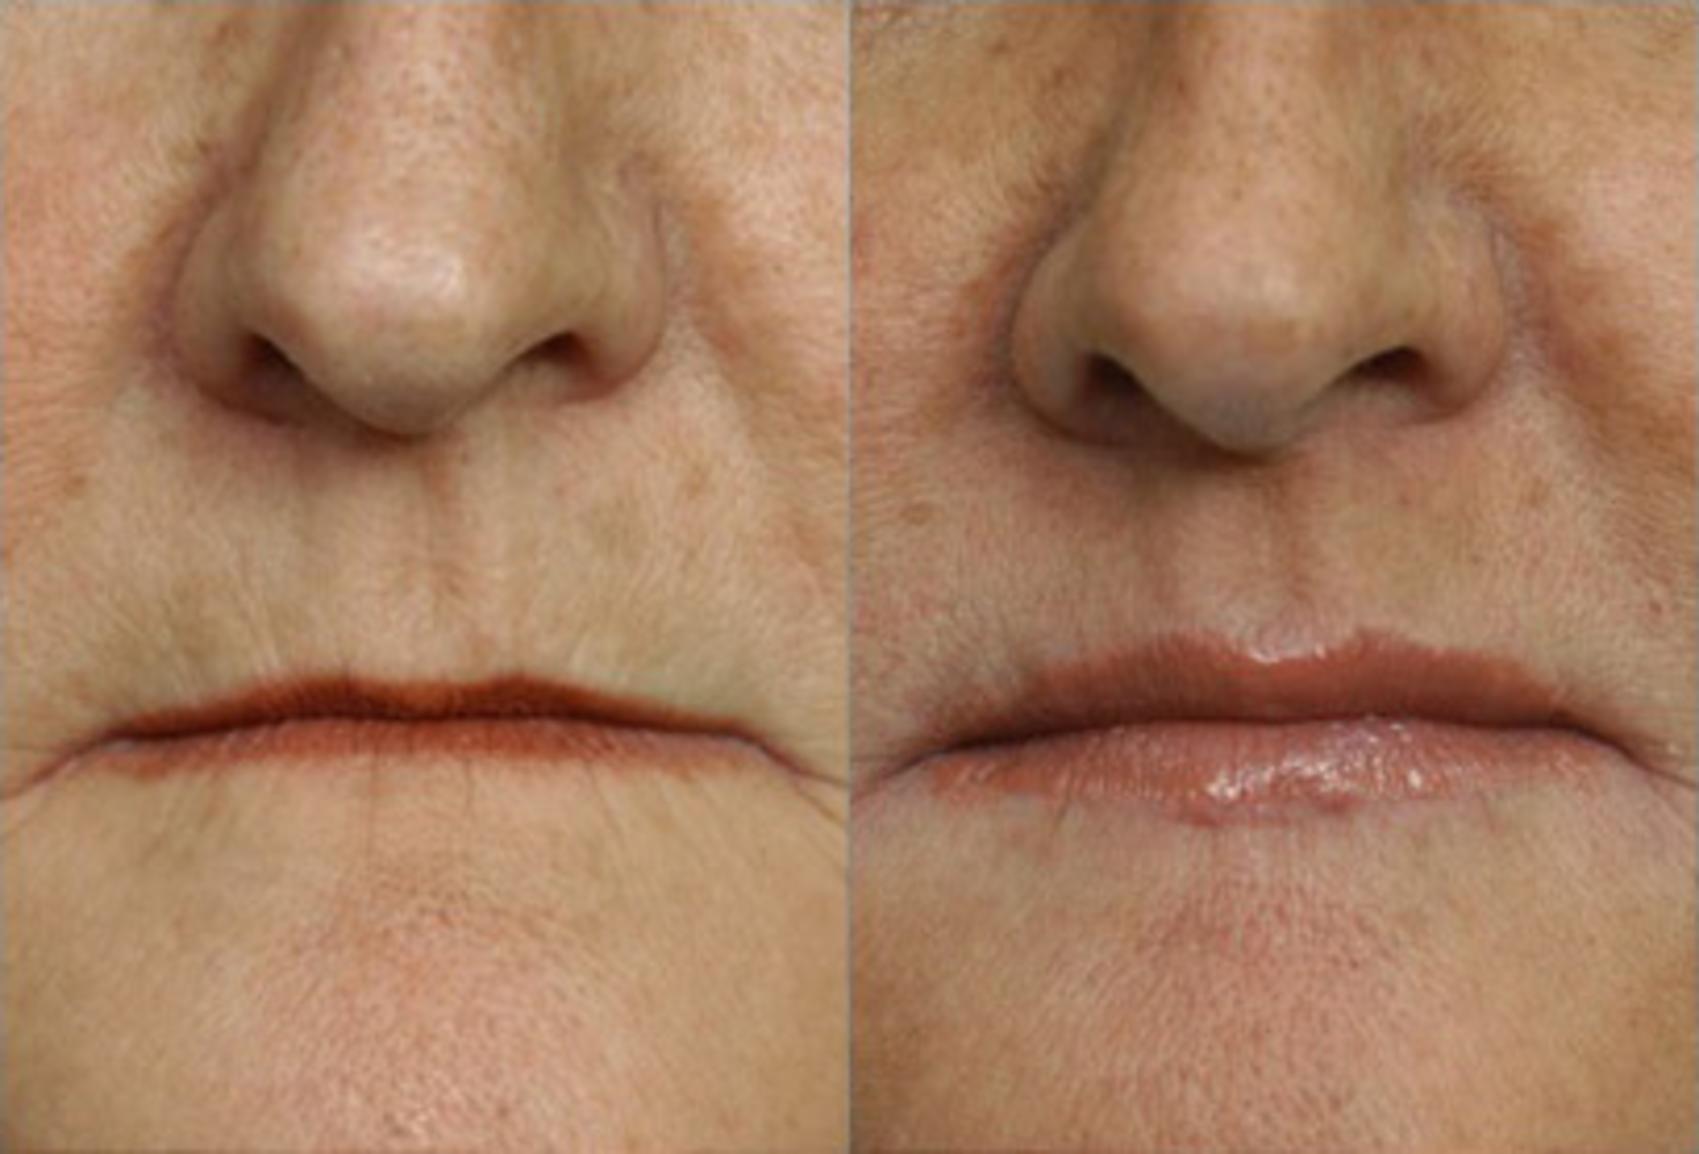 Surgical Lip Enhancement Before & After Photo | Scottsdale, AZ | Hobgood Facial Plastic Surgery: Todd Hobgood, MD